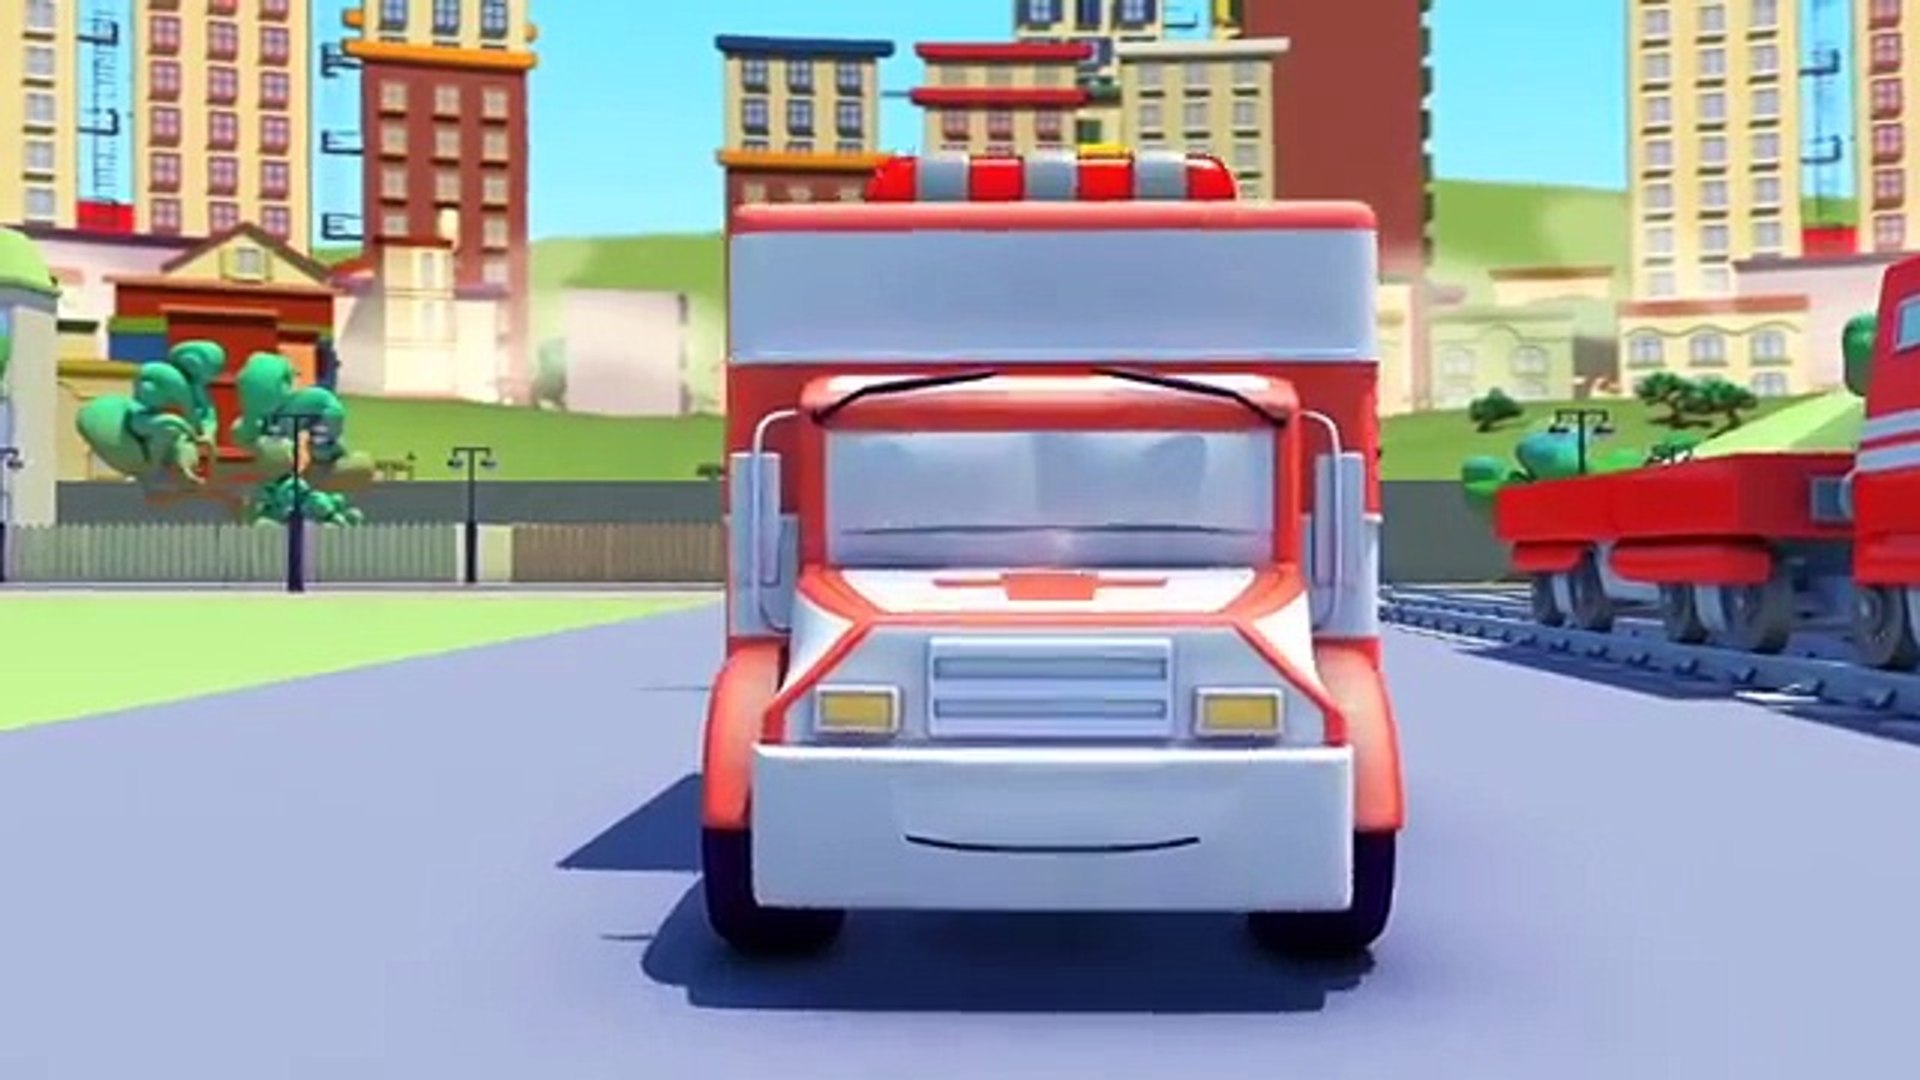 Trenuletul Troy si Ambulanta în Orasul Masinilor| masini si camioane,  desene pentru copii - Dailymotion Video